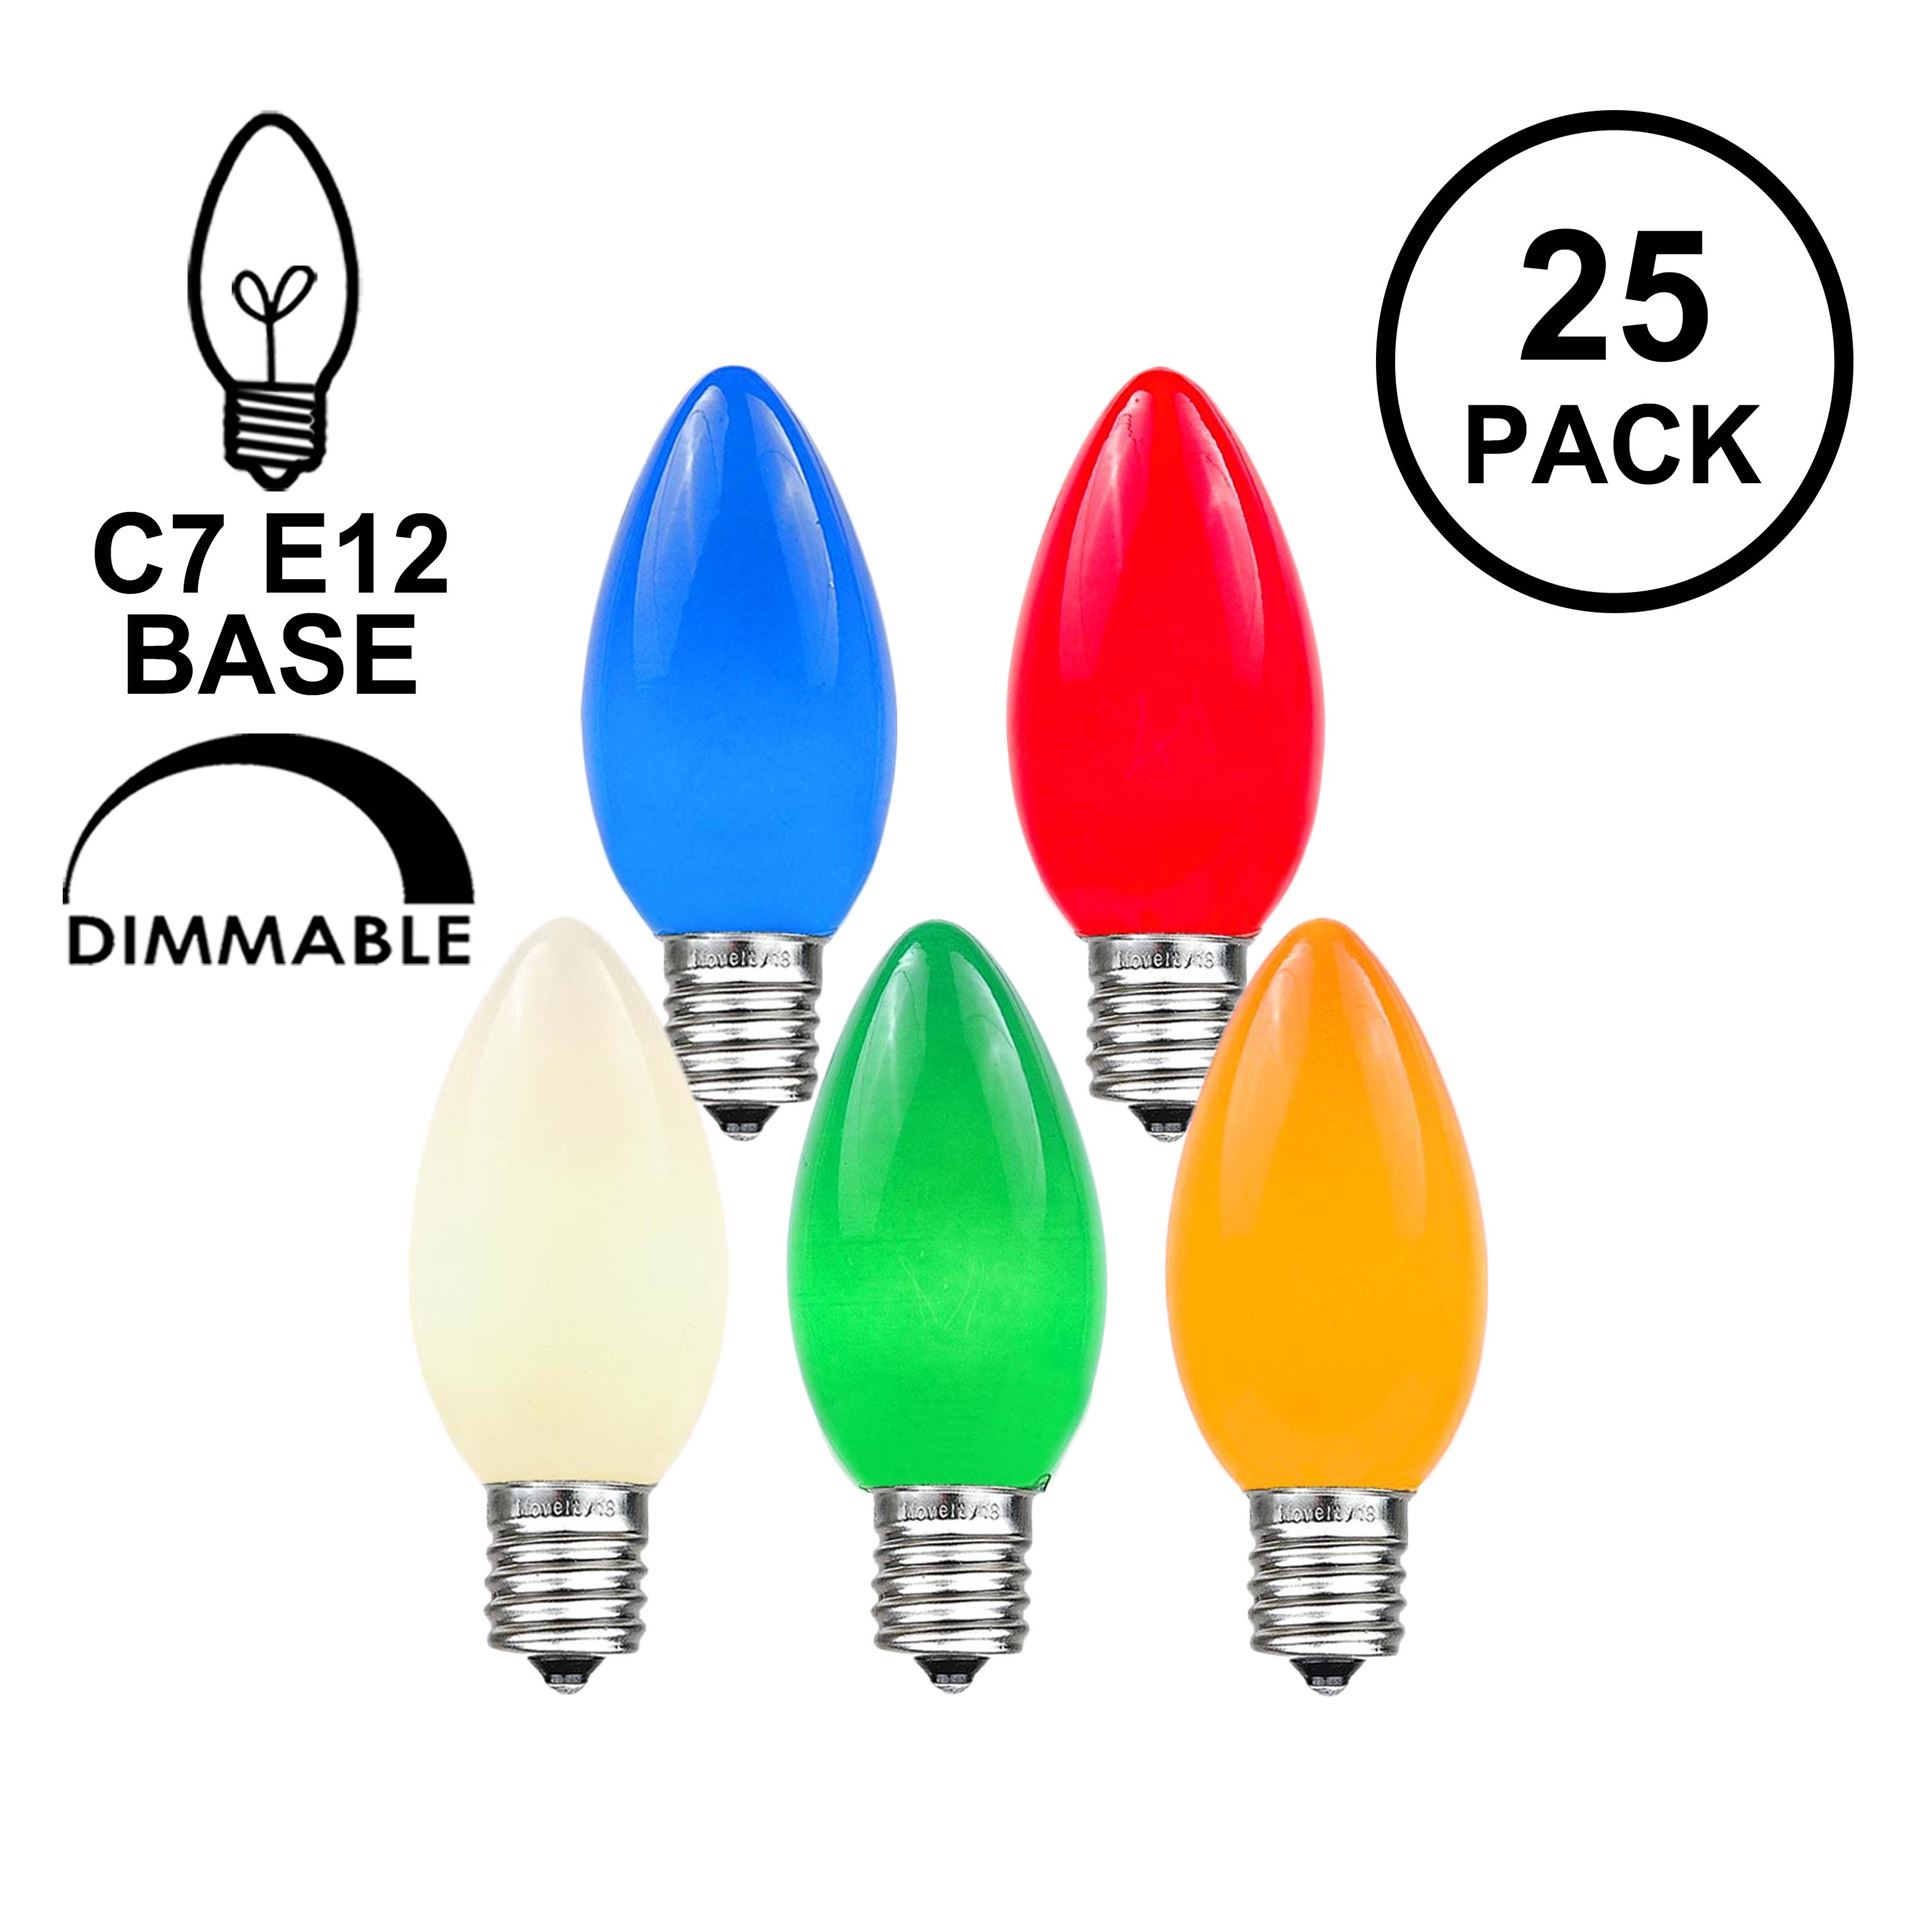 C7//E12 Candelabra Base 5 Watt-Clear Dr.BeTree C7 Clear Bulbs Christmas Light Bulbs 25 Pack Outdoor String Light Replacement Bulbs